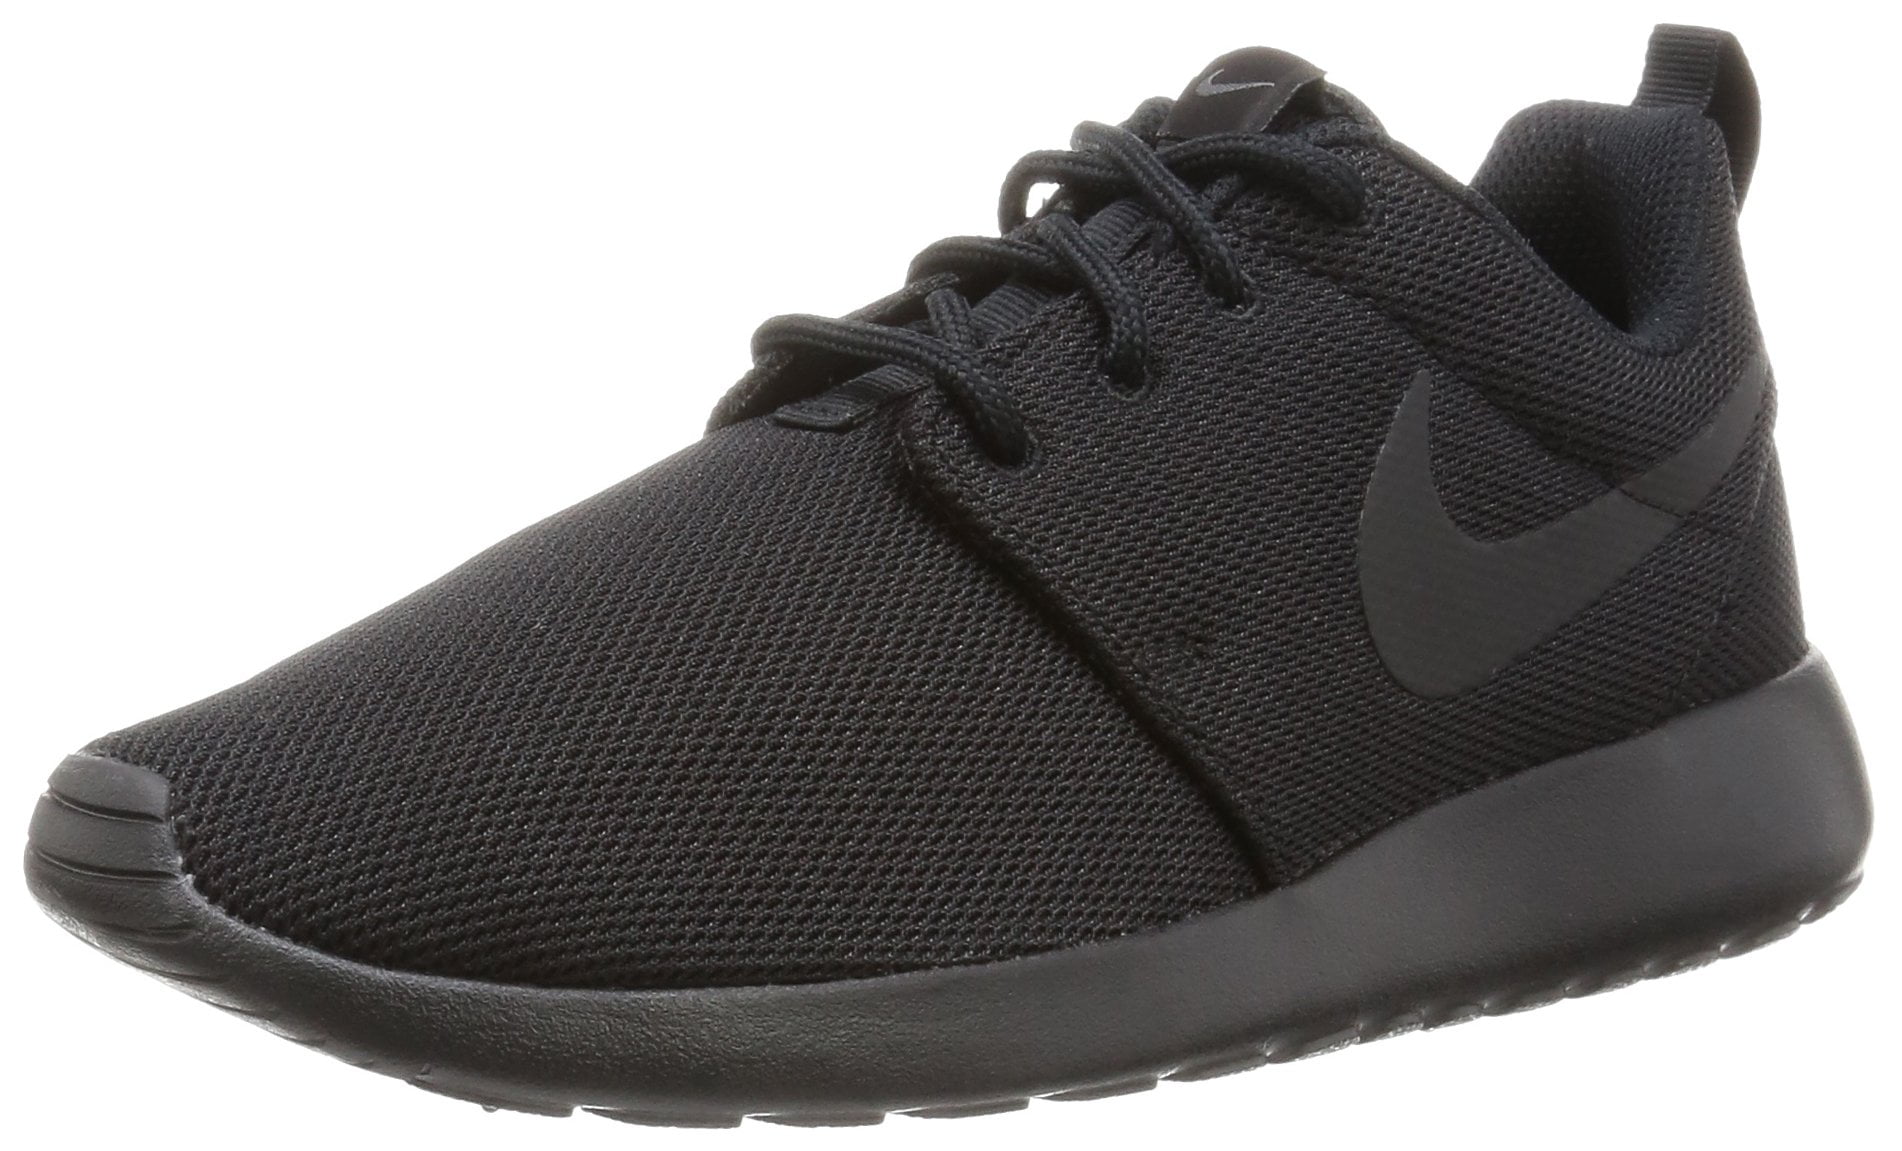 als resultaat dreigen voorzetsel Nike 844994-001: Womens Roshe One running shoe Black/Dark Grey  (Black/Black, 10 B(M) US) - Walmart.com